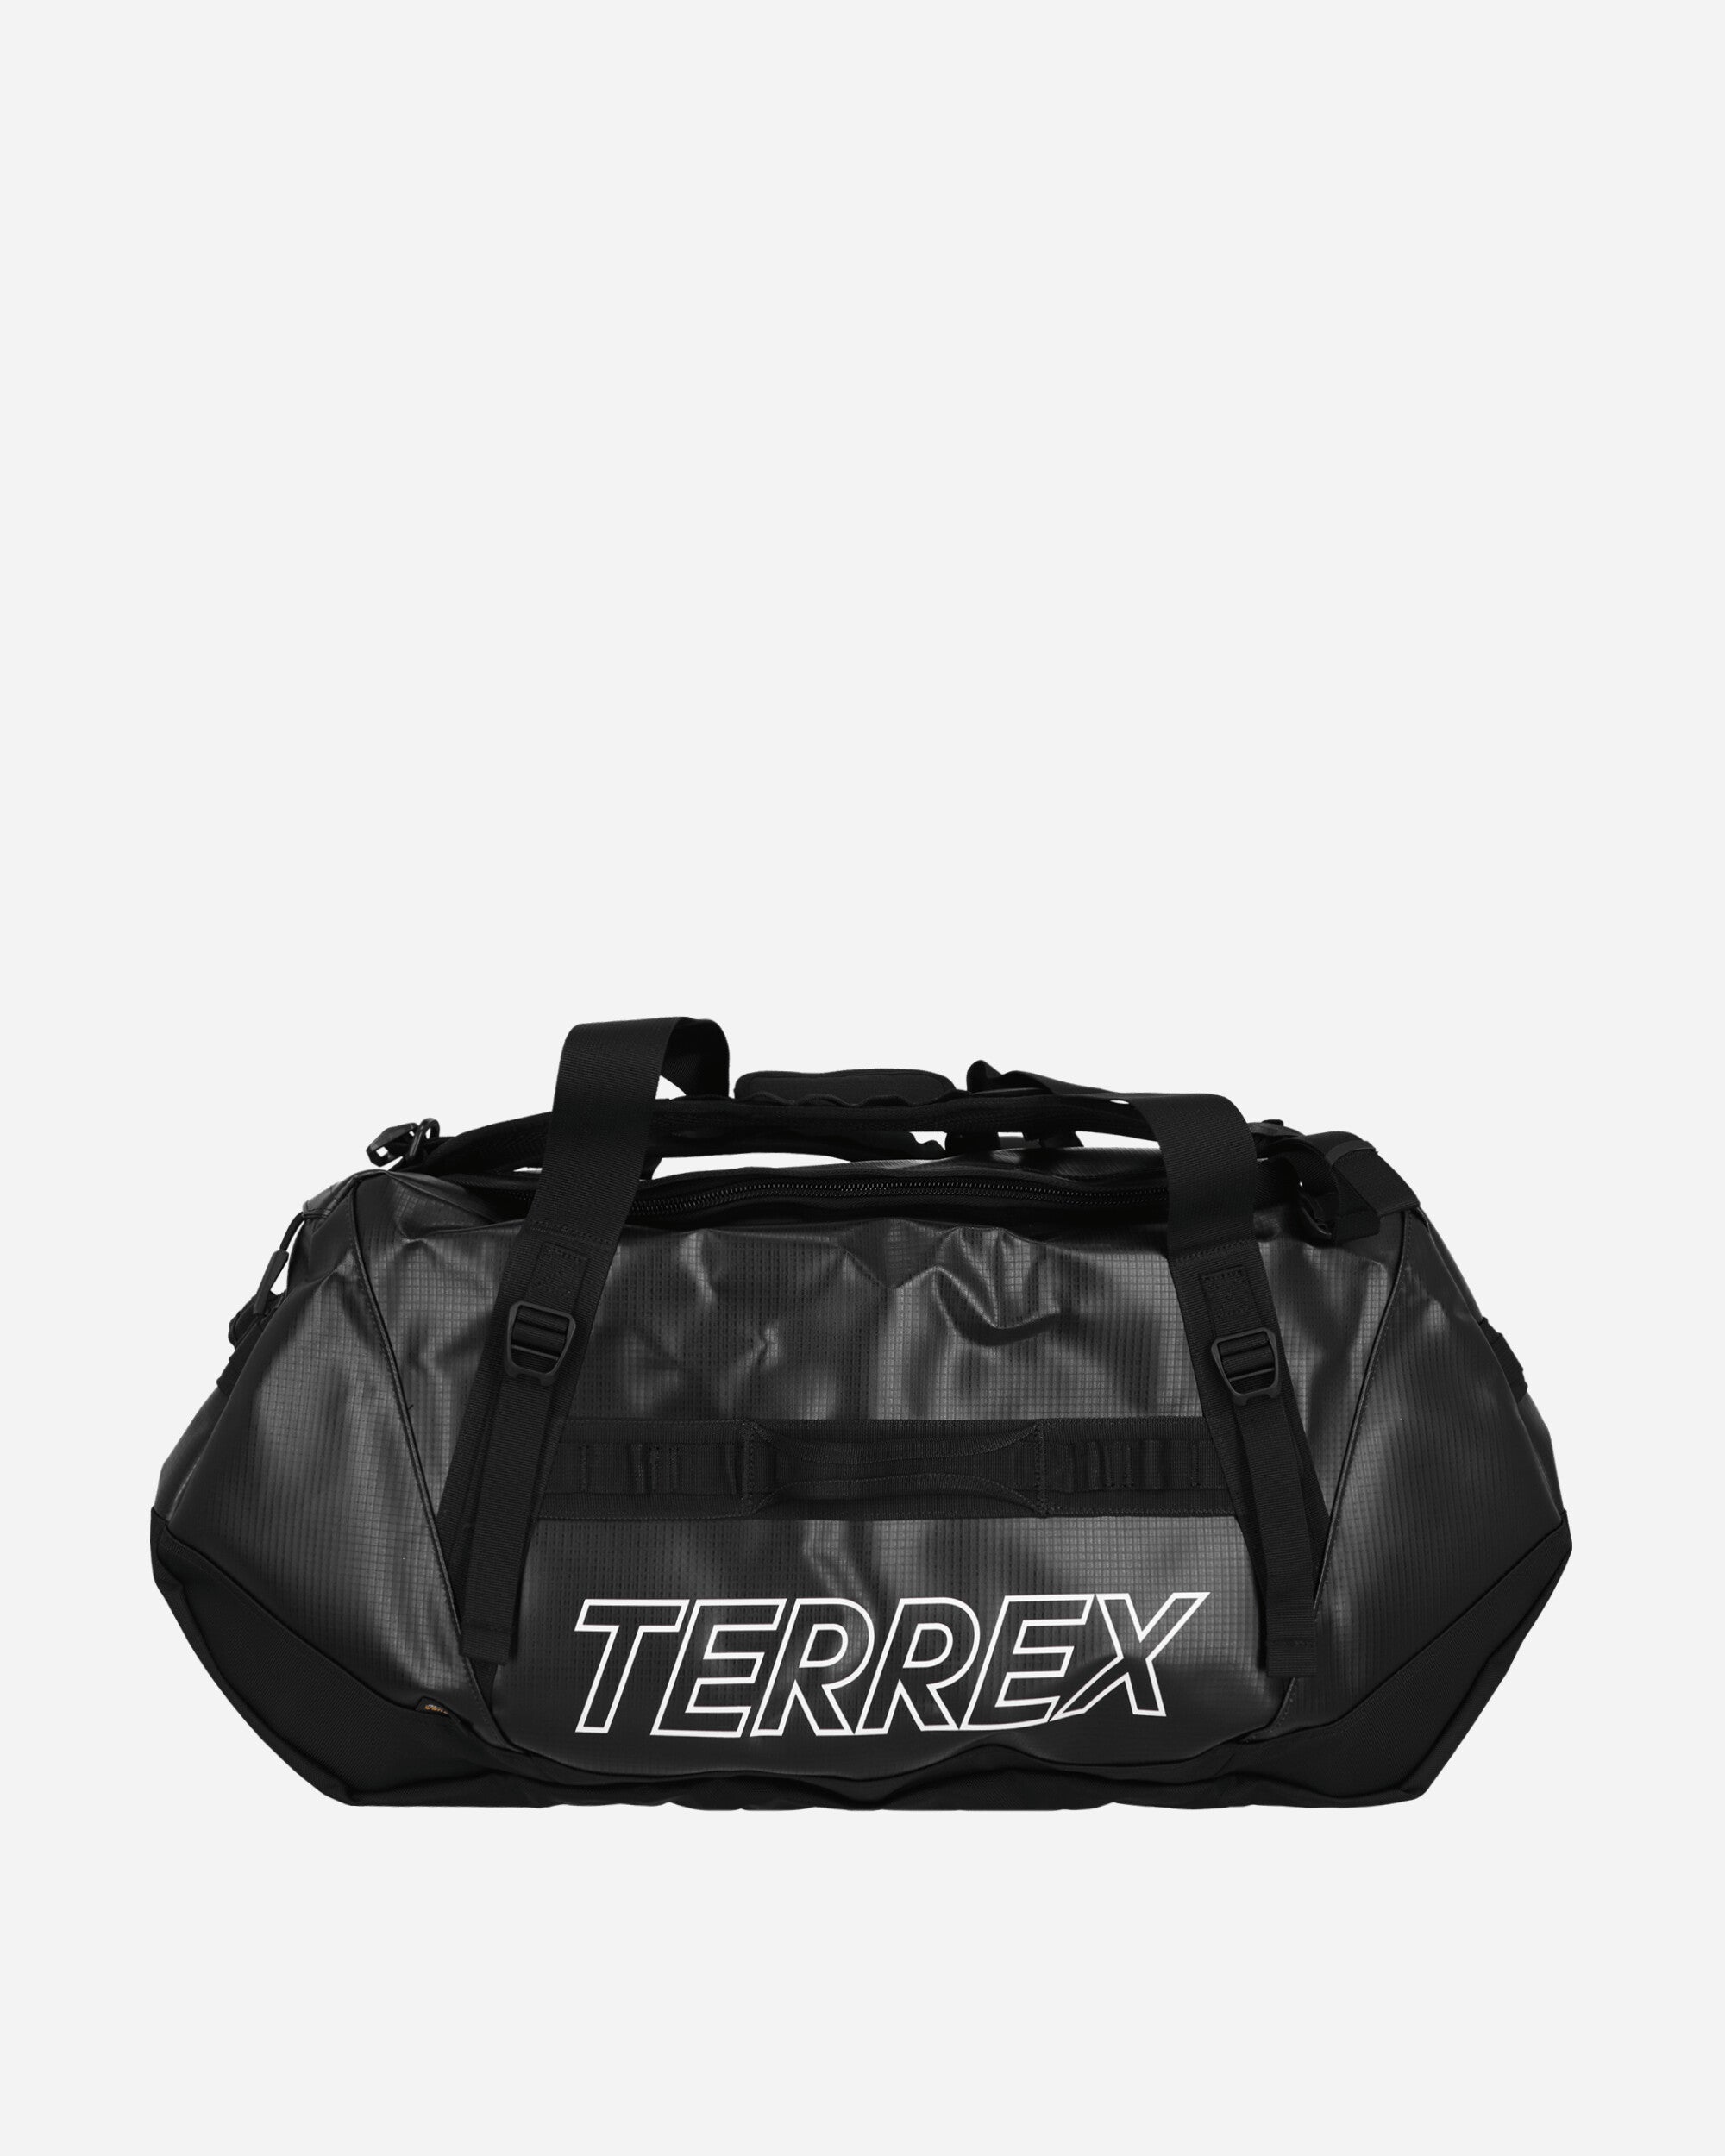 TERREX Expedition Duffel Bag Large Black